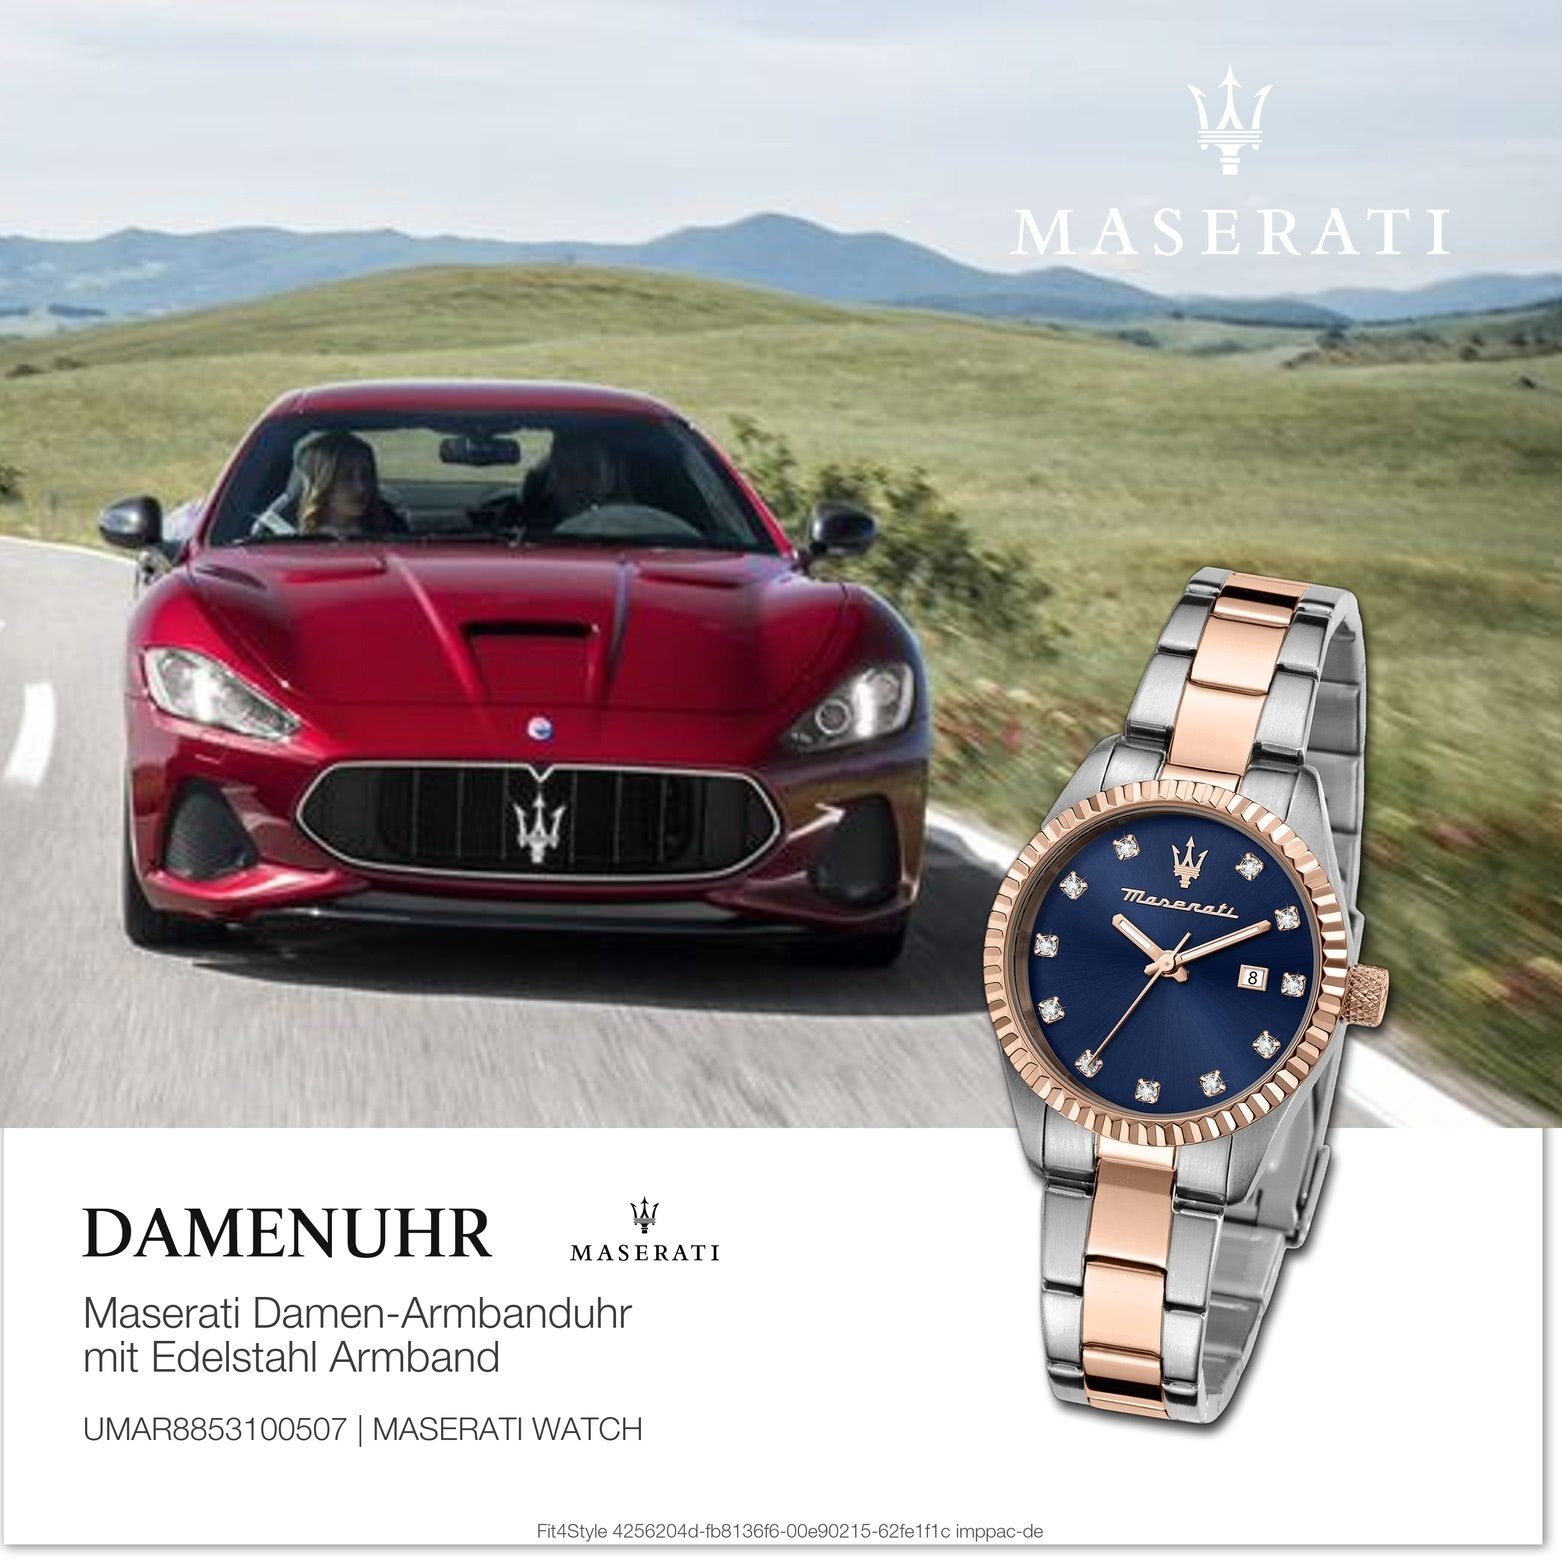 MASERATI Quarzuhr Italy Maserati Made-In rund, Damenuhr bicolor mittel Edelstahlarmband, (ca. Damenuhr 31mm) COMPETIZIONE